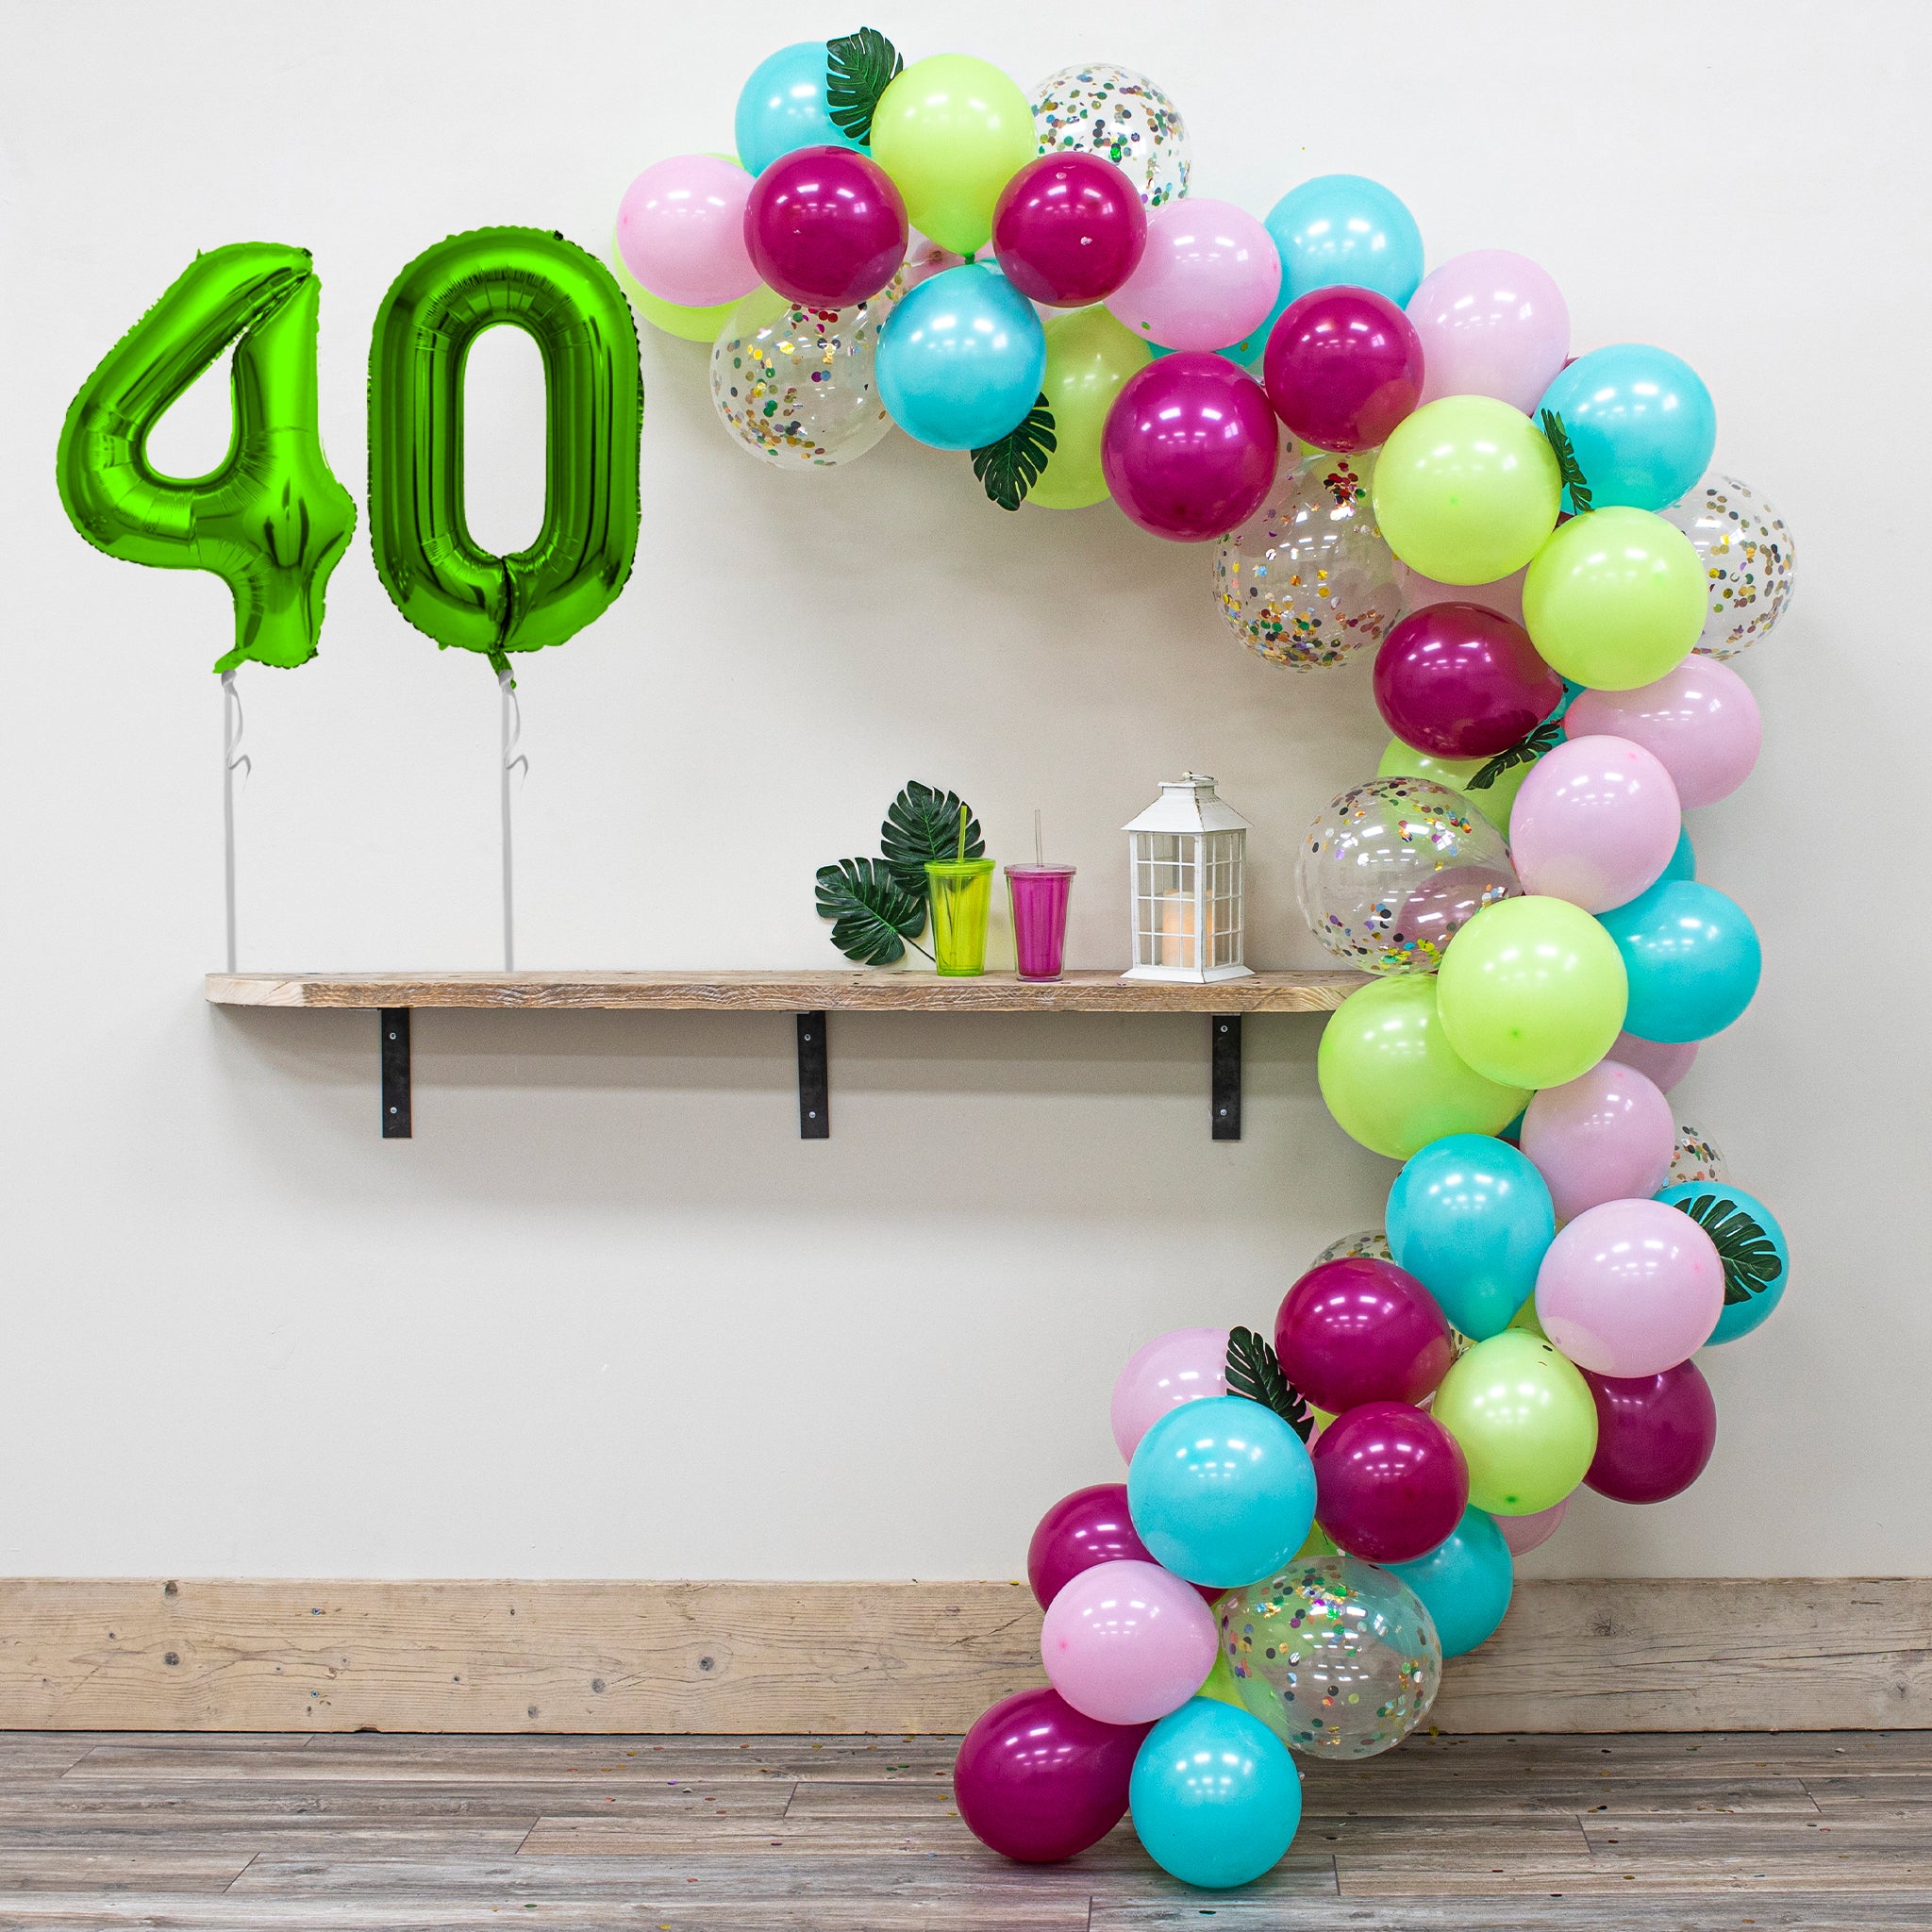 40th Birthday Hawaiian Tiki Party Balloon Arch Decoration Kit - Includes 70+ Balloons